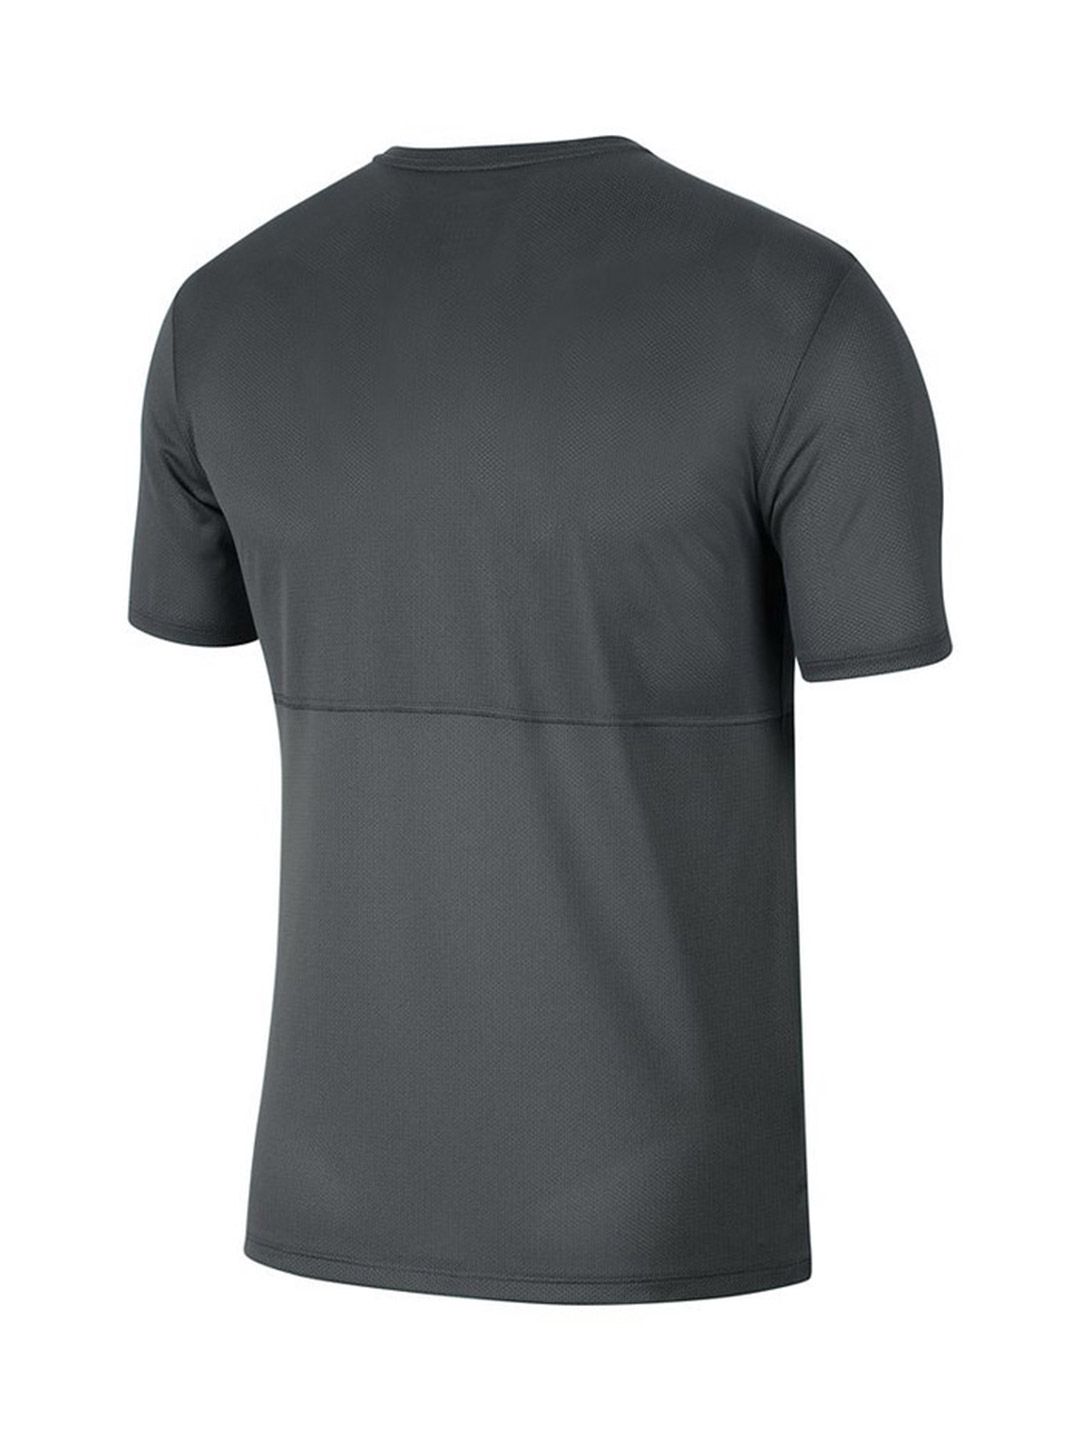 nike Merchandise: Buy Official nike Jerseys & T Shirts Online | shop